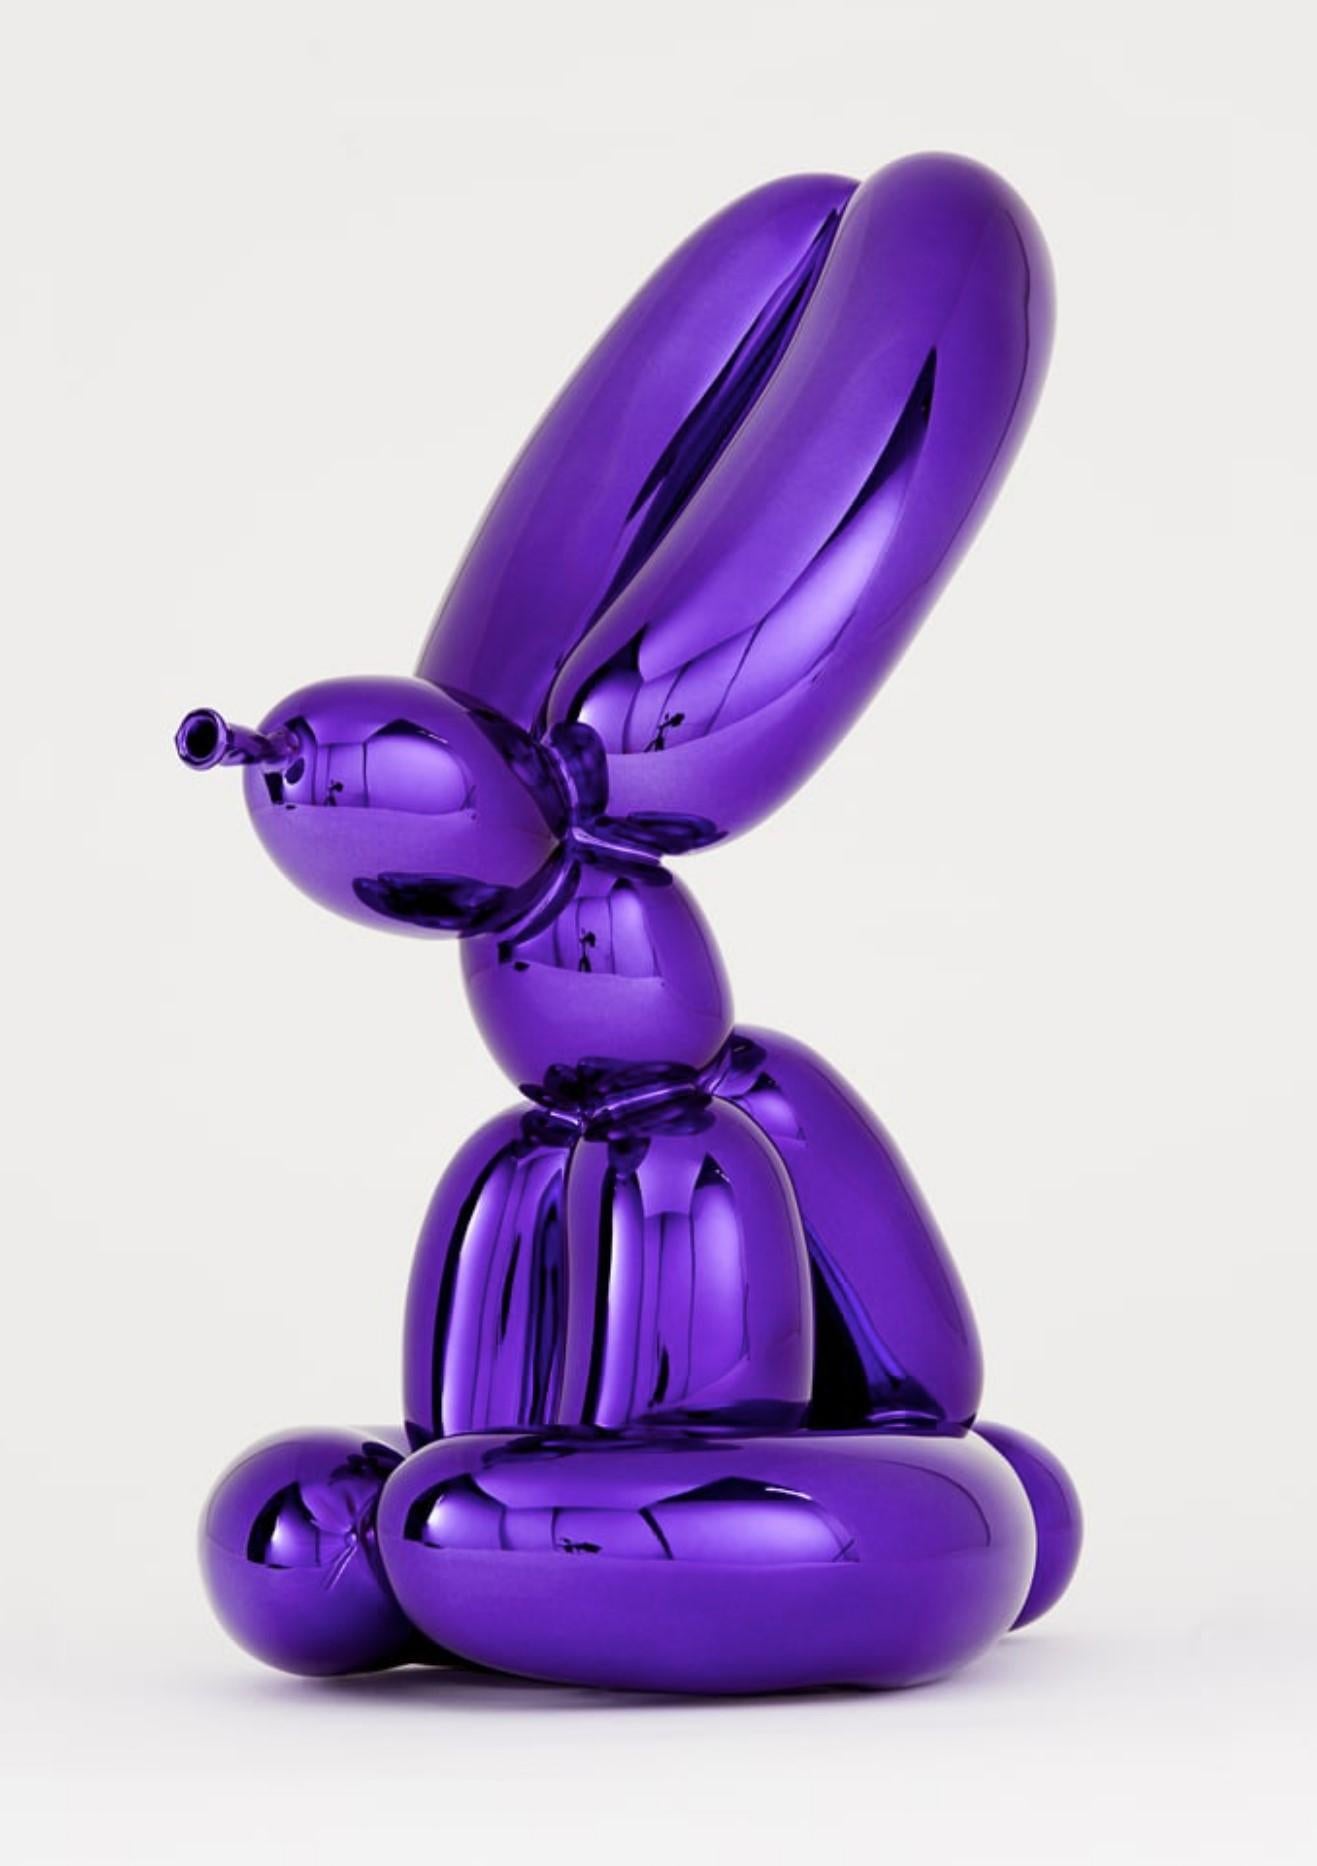 Ballon Rabbit Violet - Sculpture by Jeff Koons